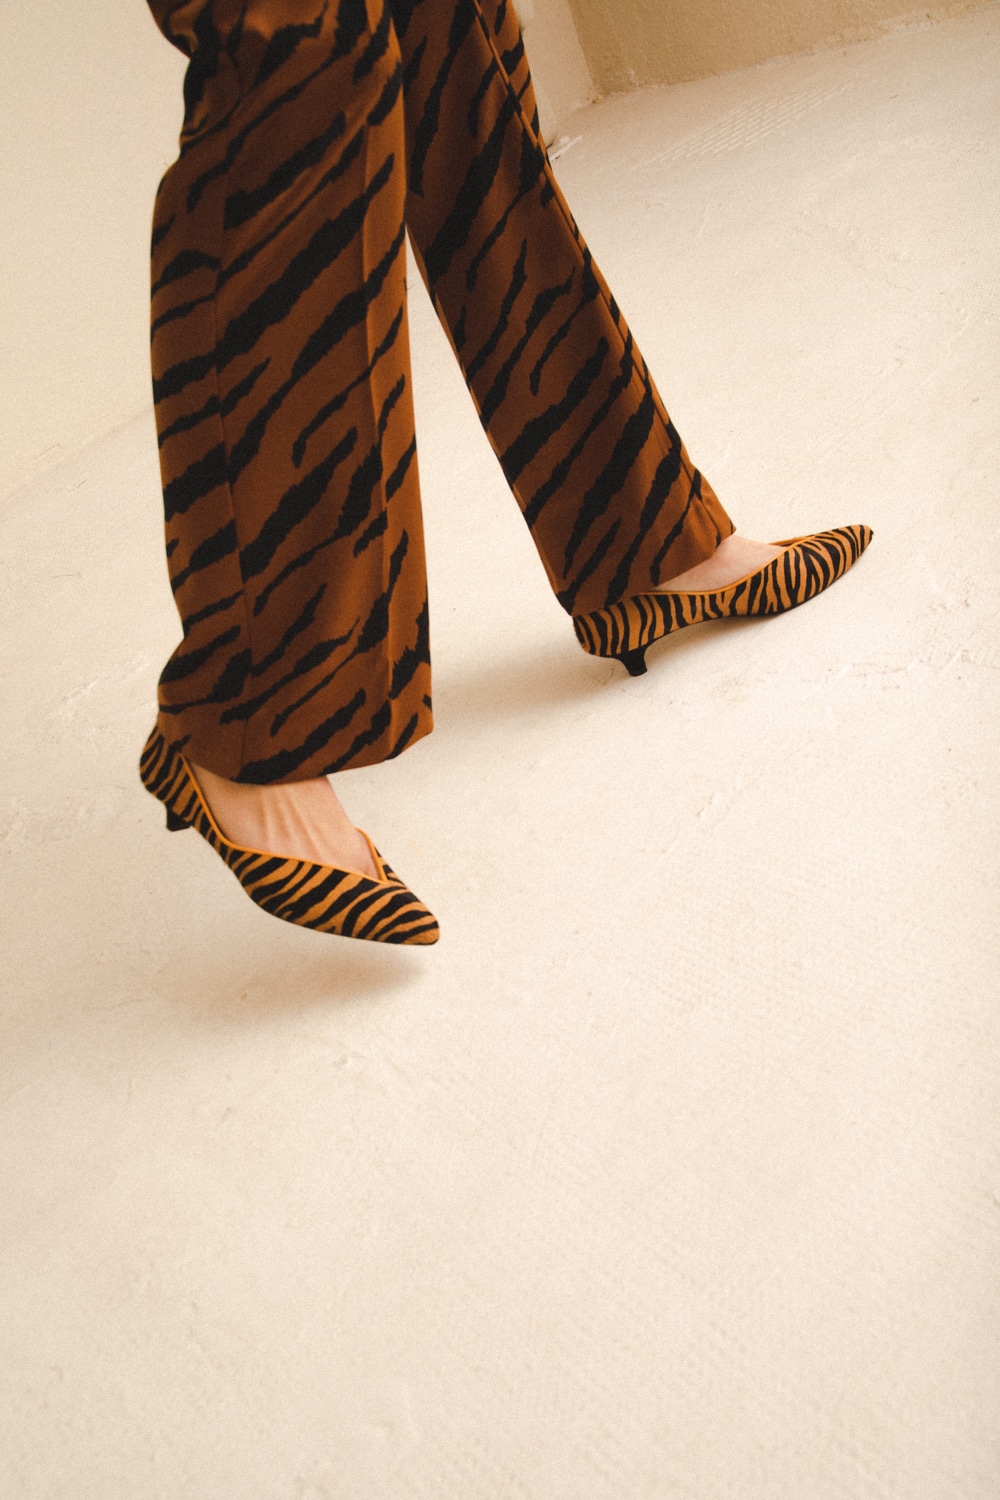 Zapatos Tacon Kitten Animal Print TIGRE2